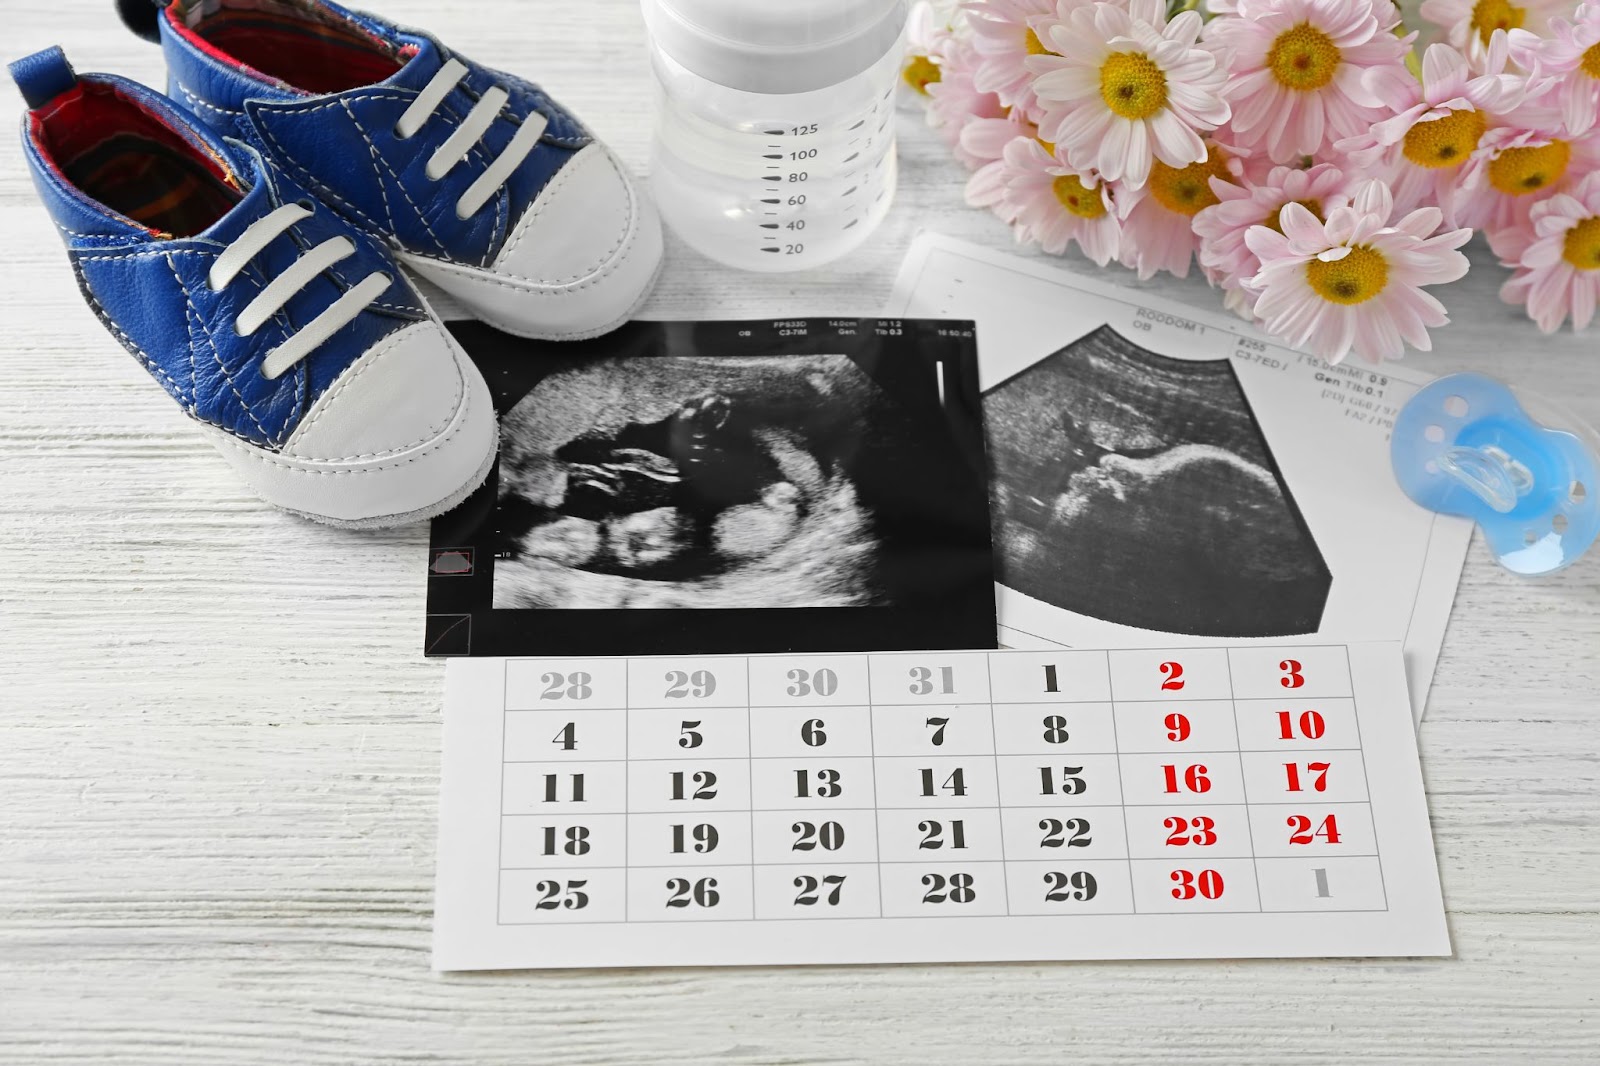 Pregnancy calendar alongside an ultrasound photo, infant shoes, and a baby bottle.